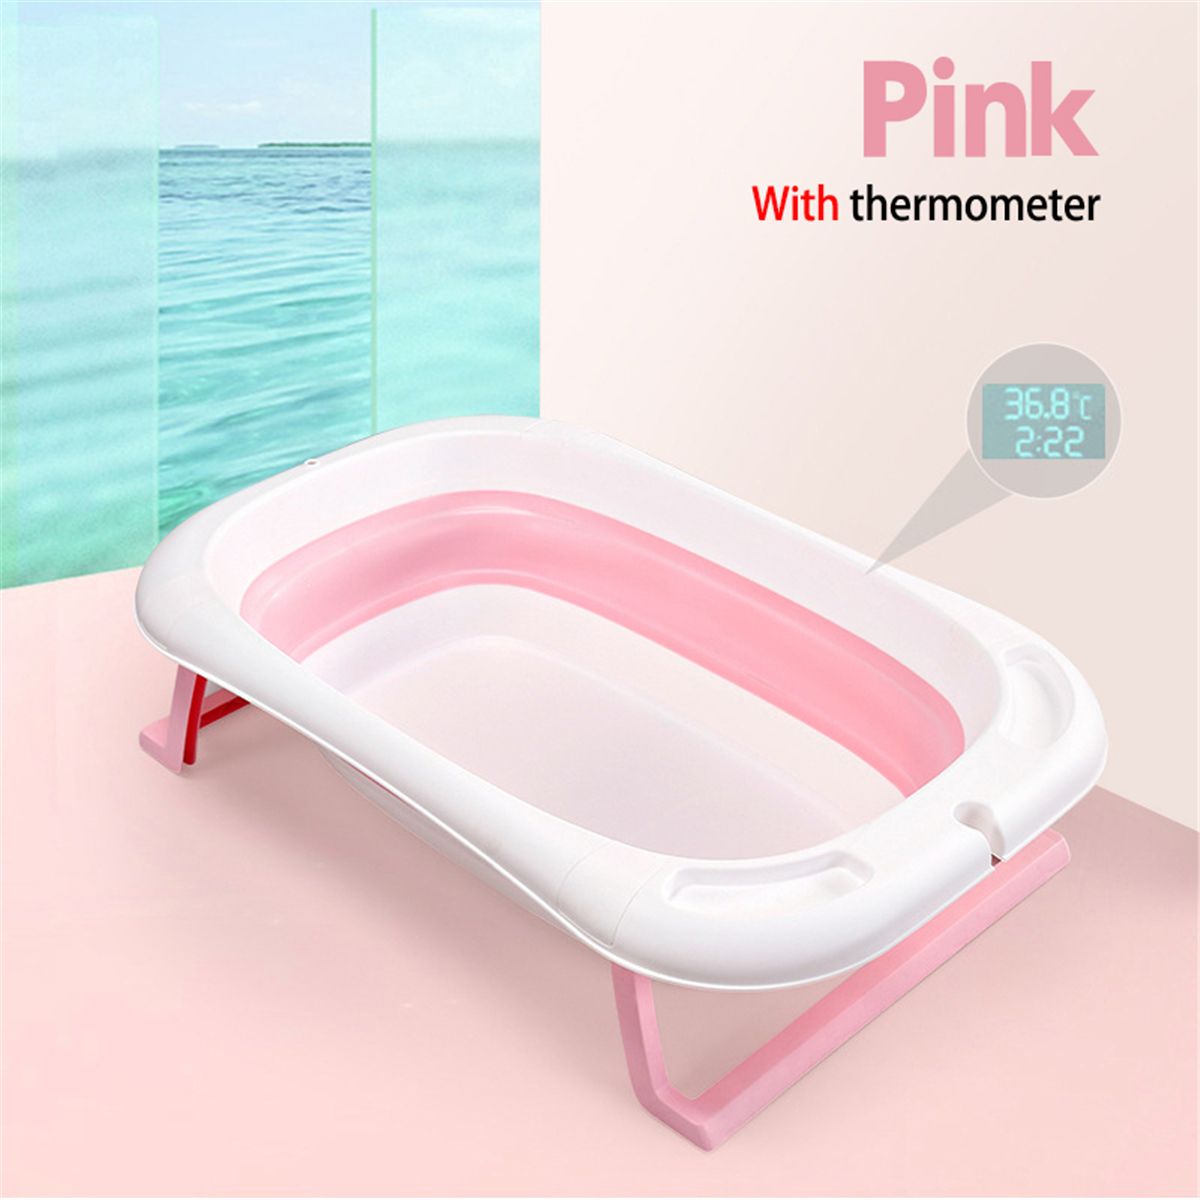 82cm323in-Portable-Foldable-Baby-Infant-Bathtub-Shower-Bath-Tub--Thermometer-1757295